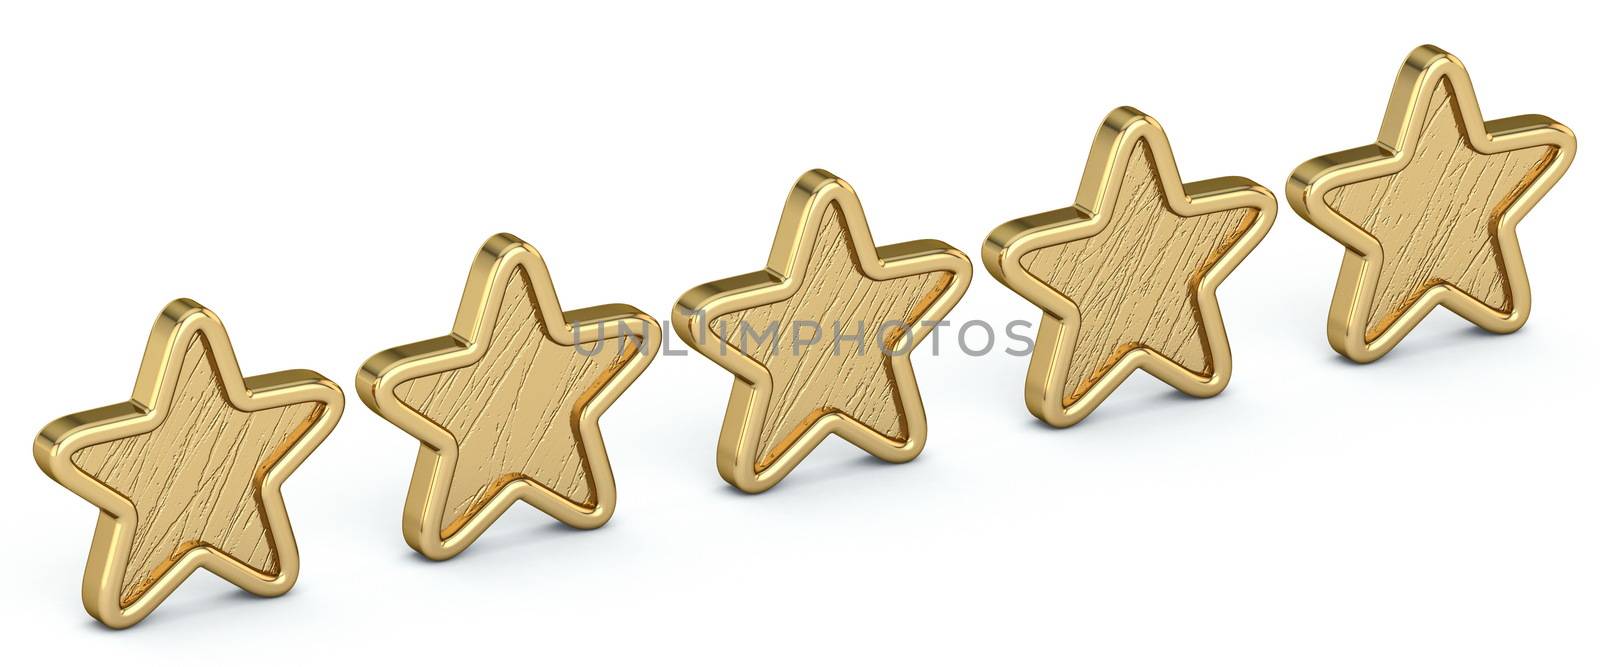 Voting concept rating FIVE golden stars 3D render illustration isolated on white background